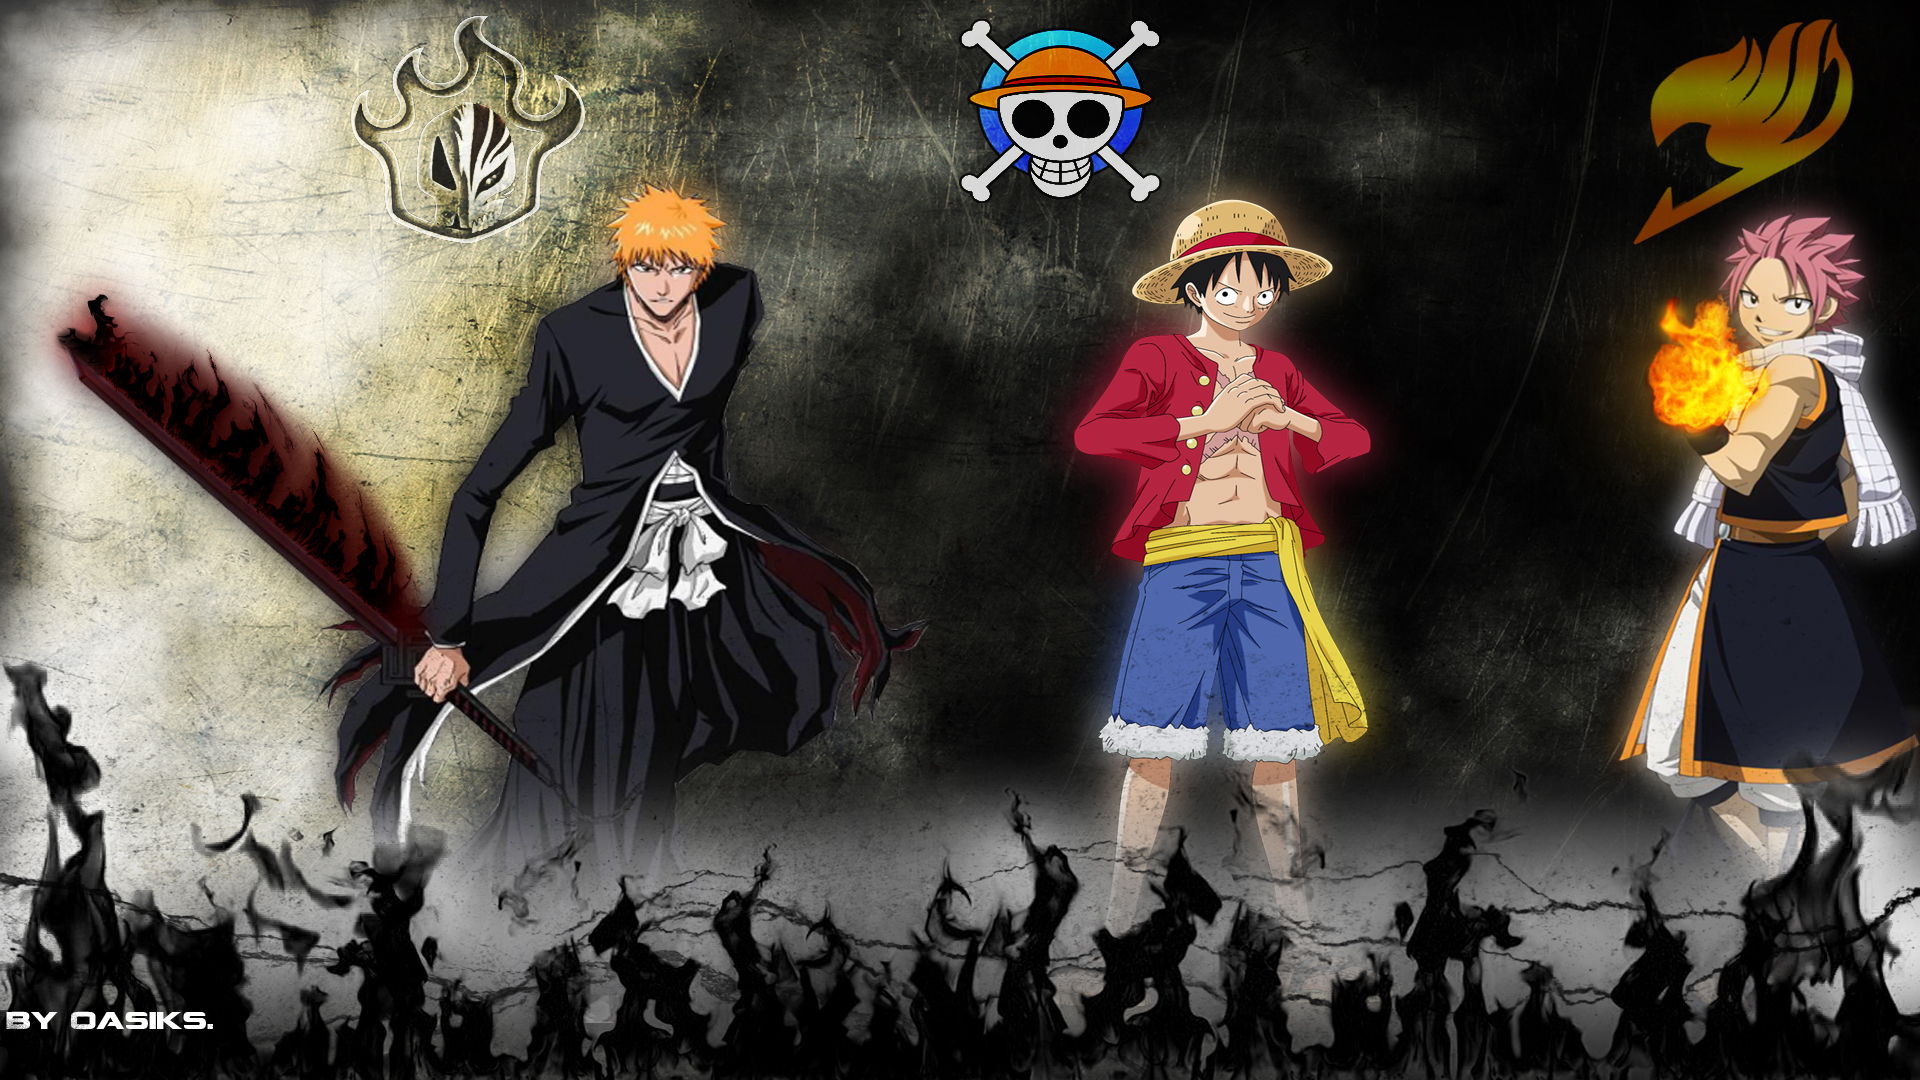 40 Gambar Wallpaper Pc Anime One Piece terbaru 2020